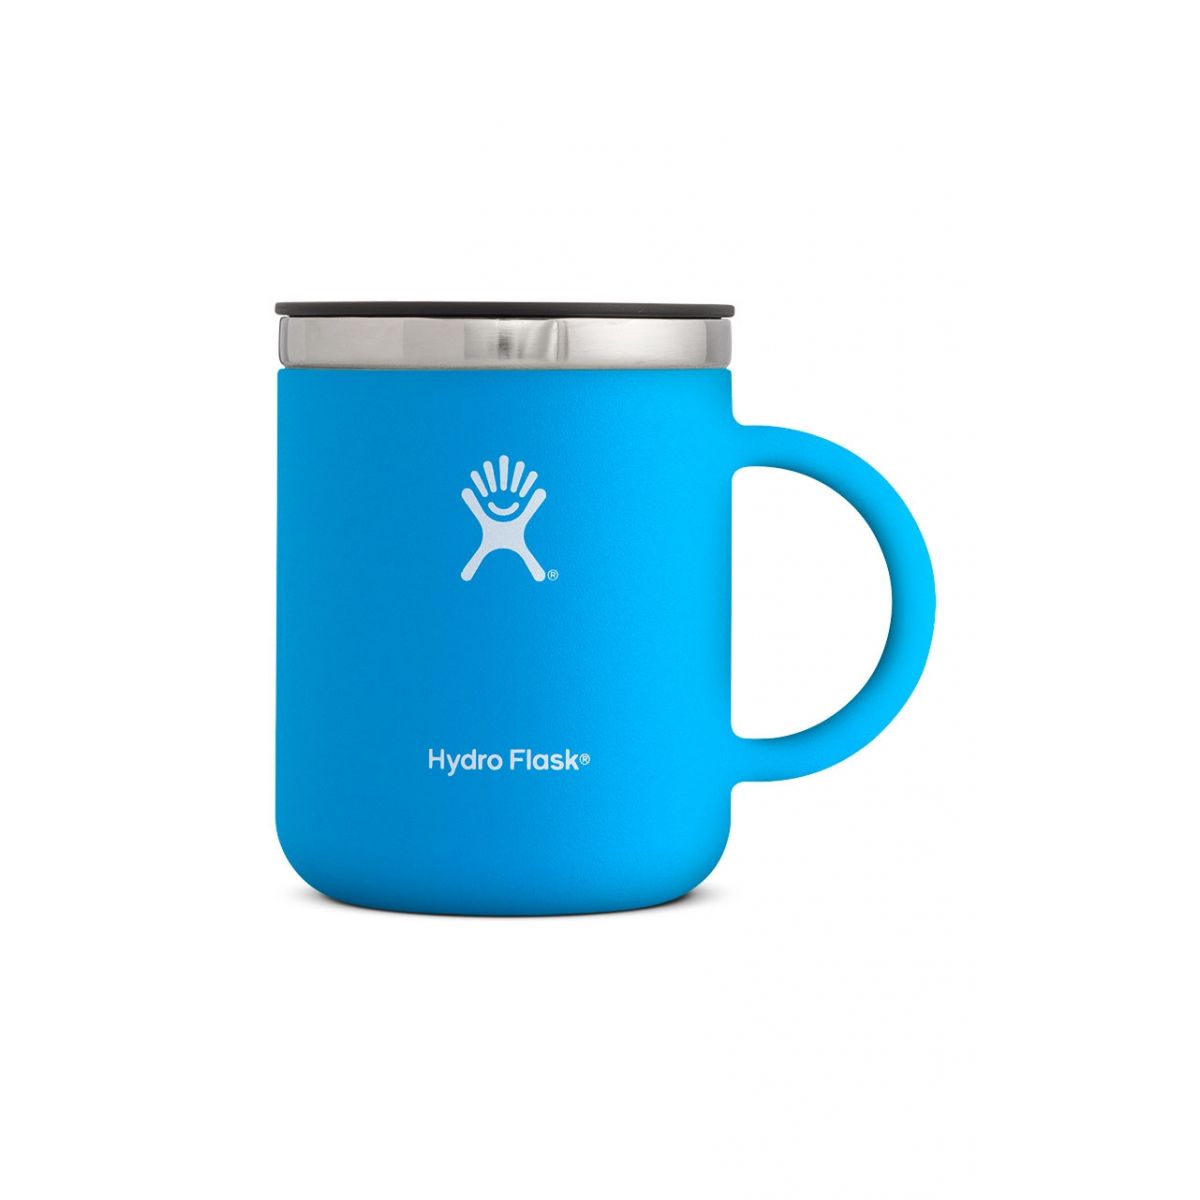 Hydro Flask 12oz Coffee Mugs (M12)